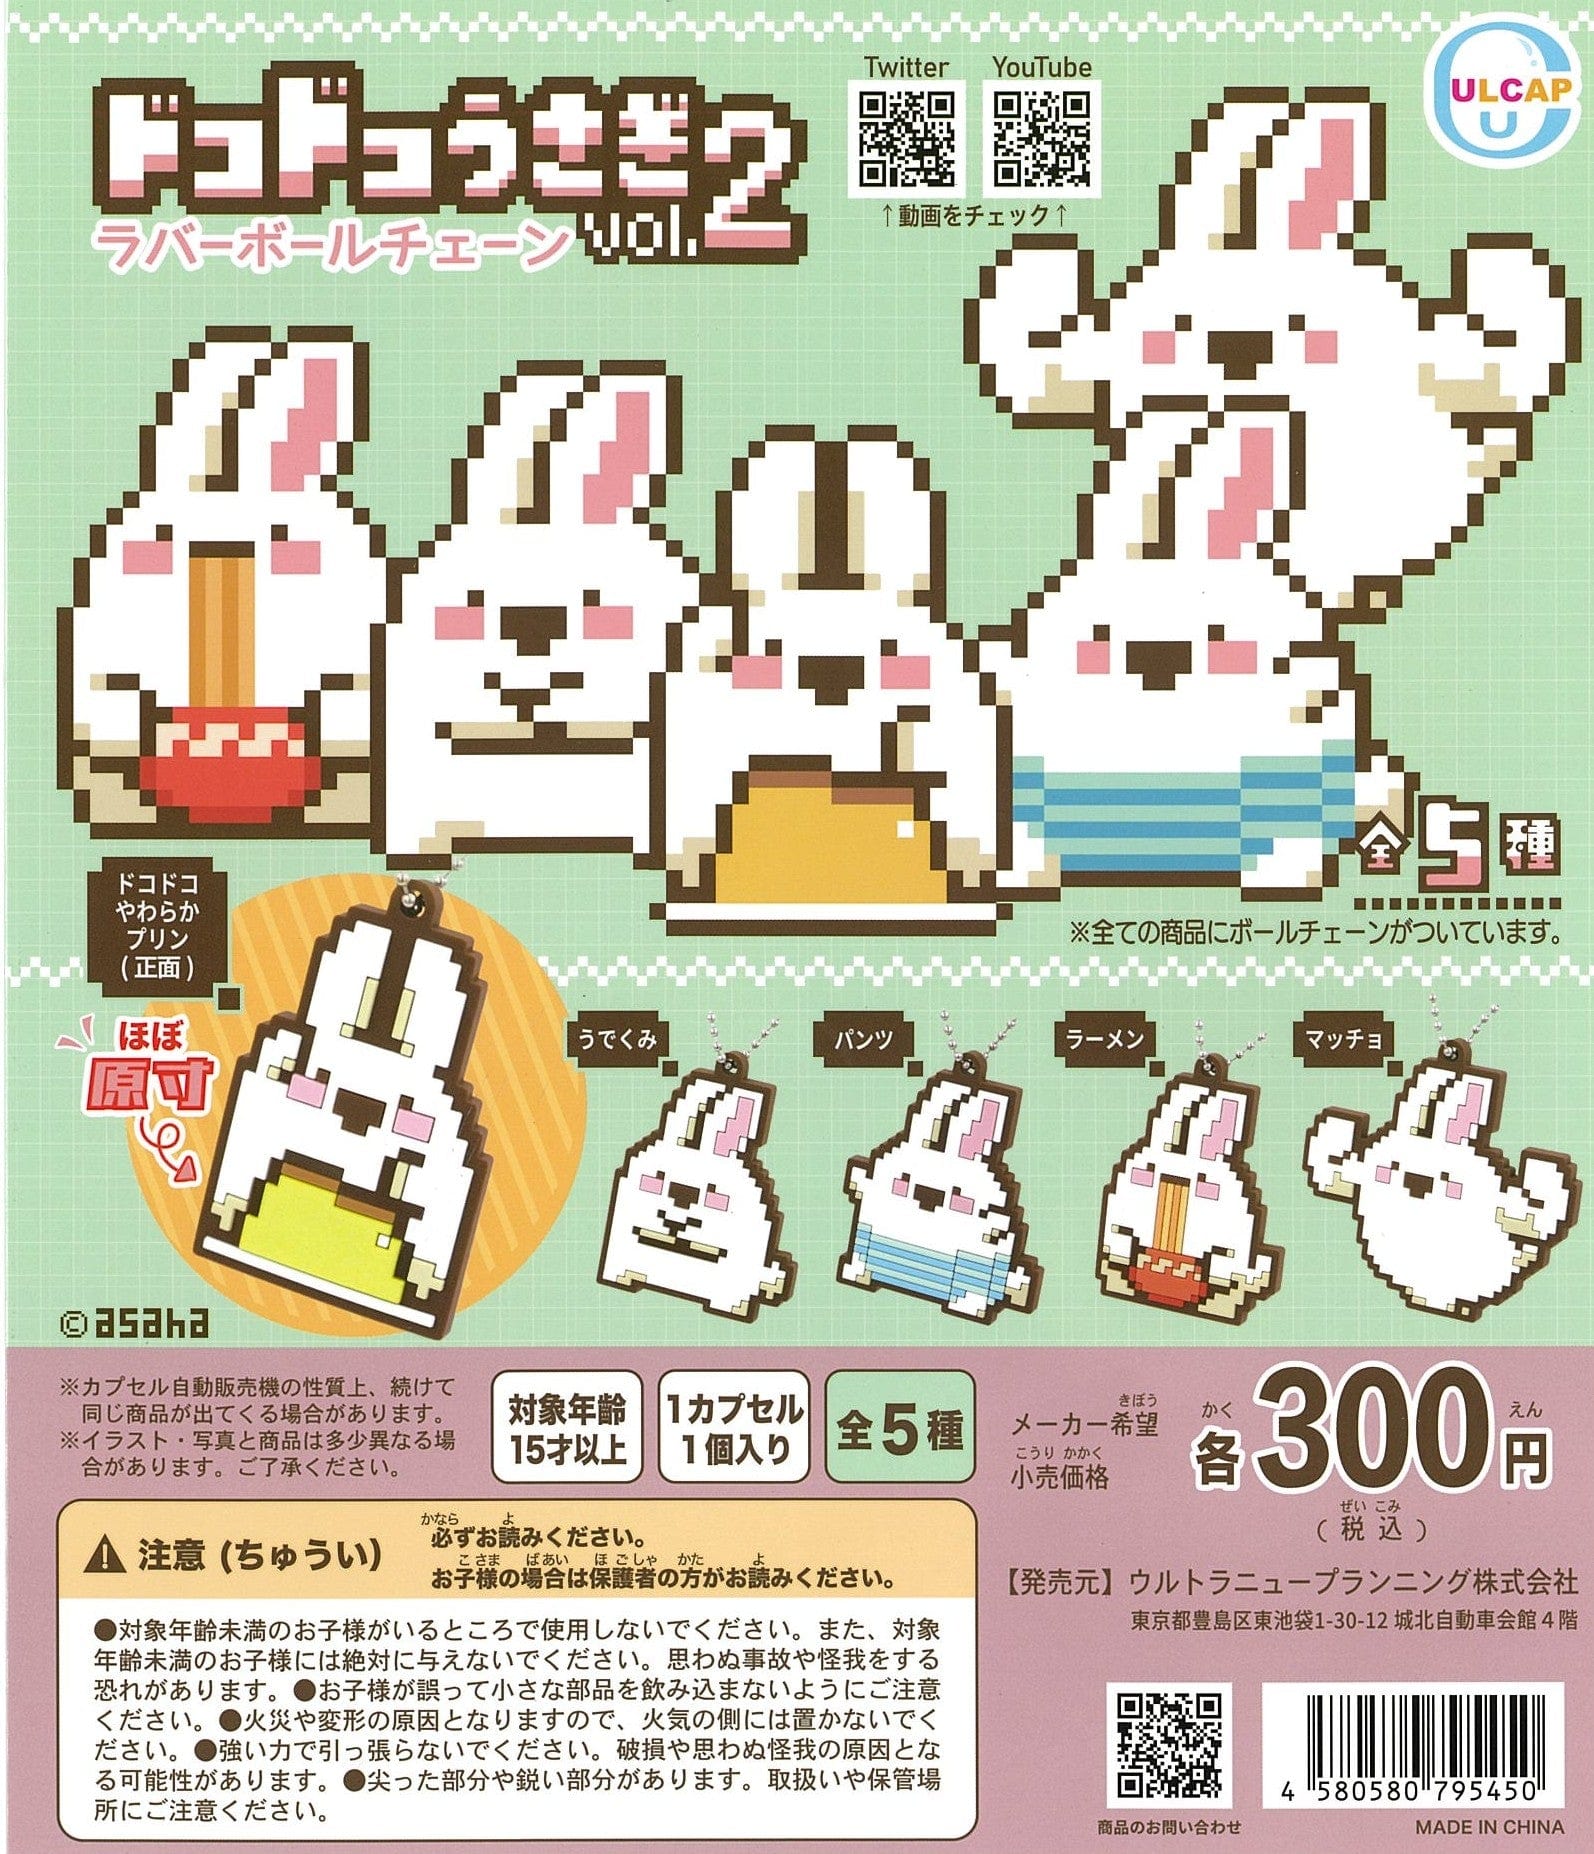 ULCAP CP2403 Dokodoko Rabbit Rubber Ball Chain Vol 2